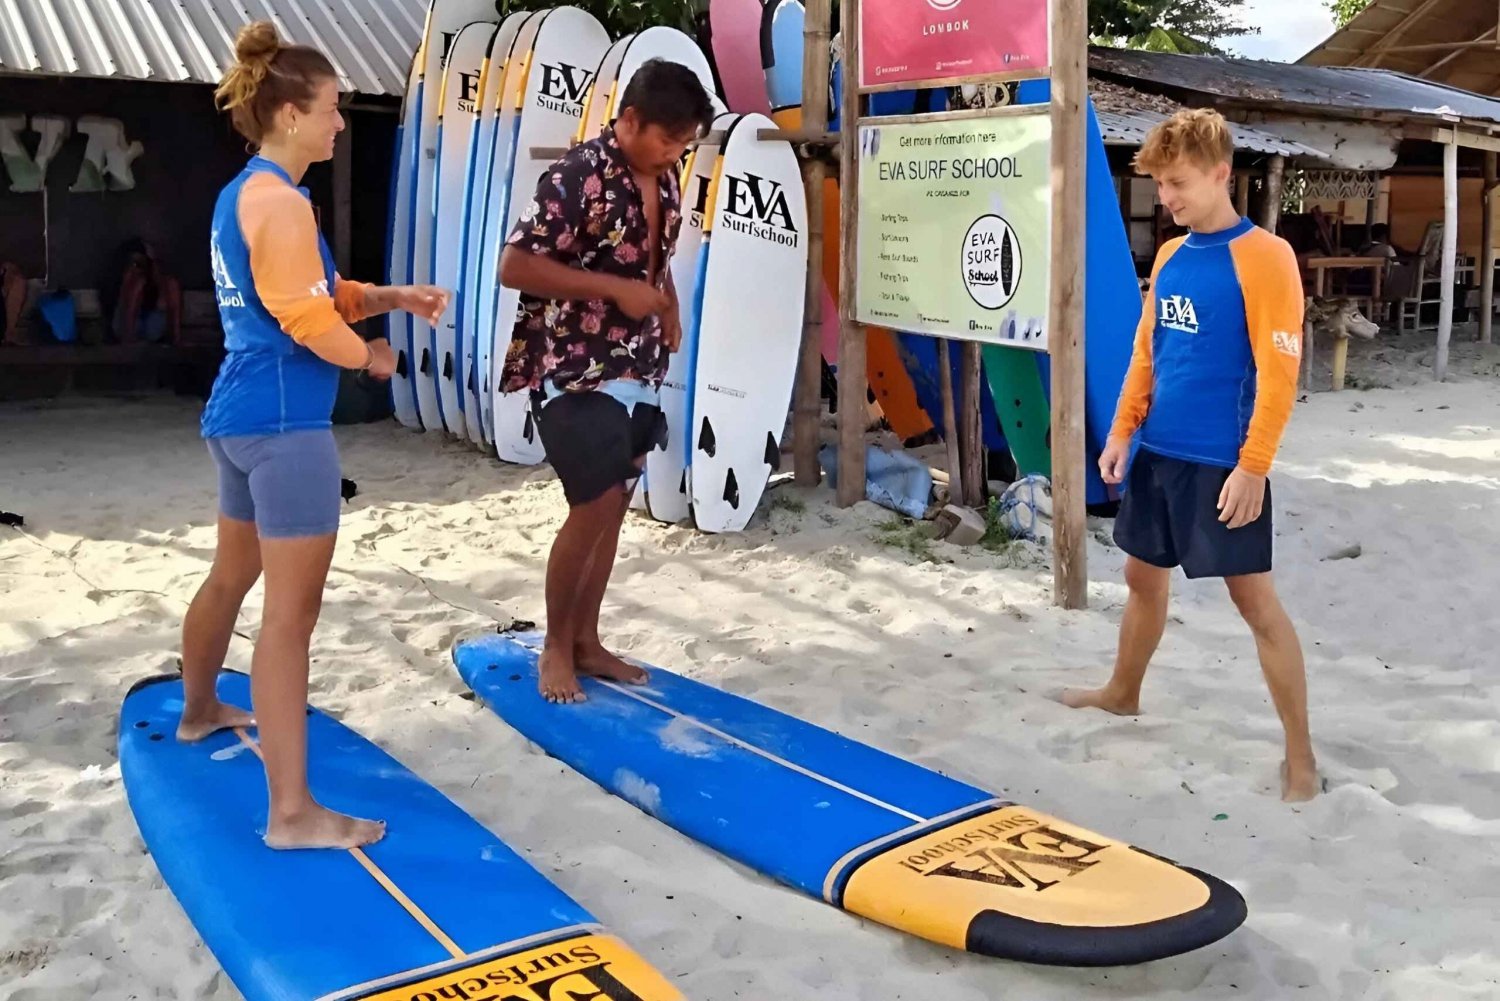 Lombok Surfkurs für Anfänger in Selong Blanak Beach